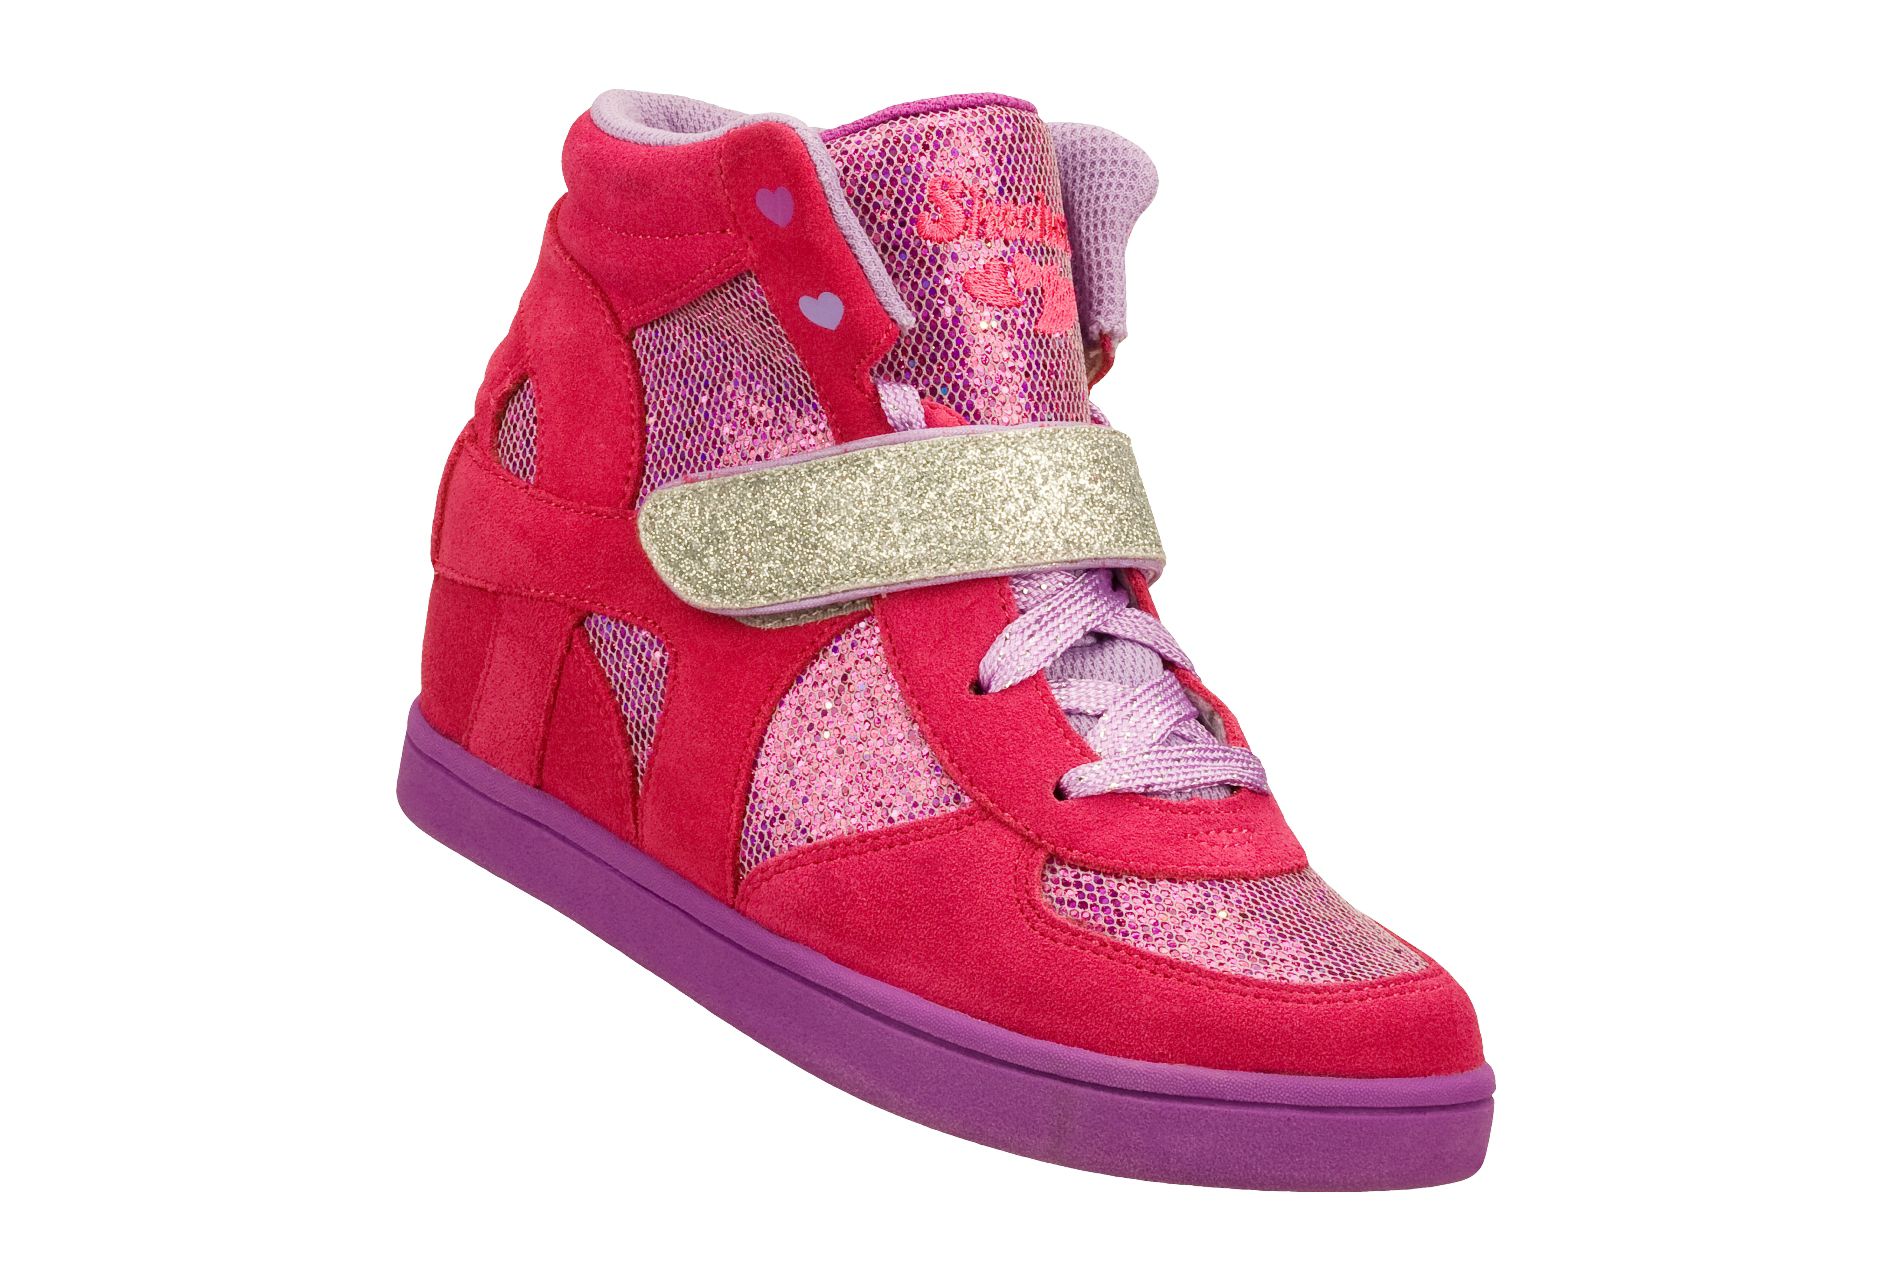 Skechers Girl's Pretty Plus 2 Fashion Wedge Sneaker - Pink